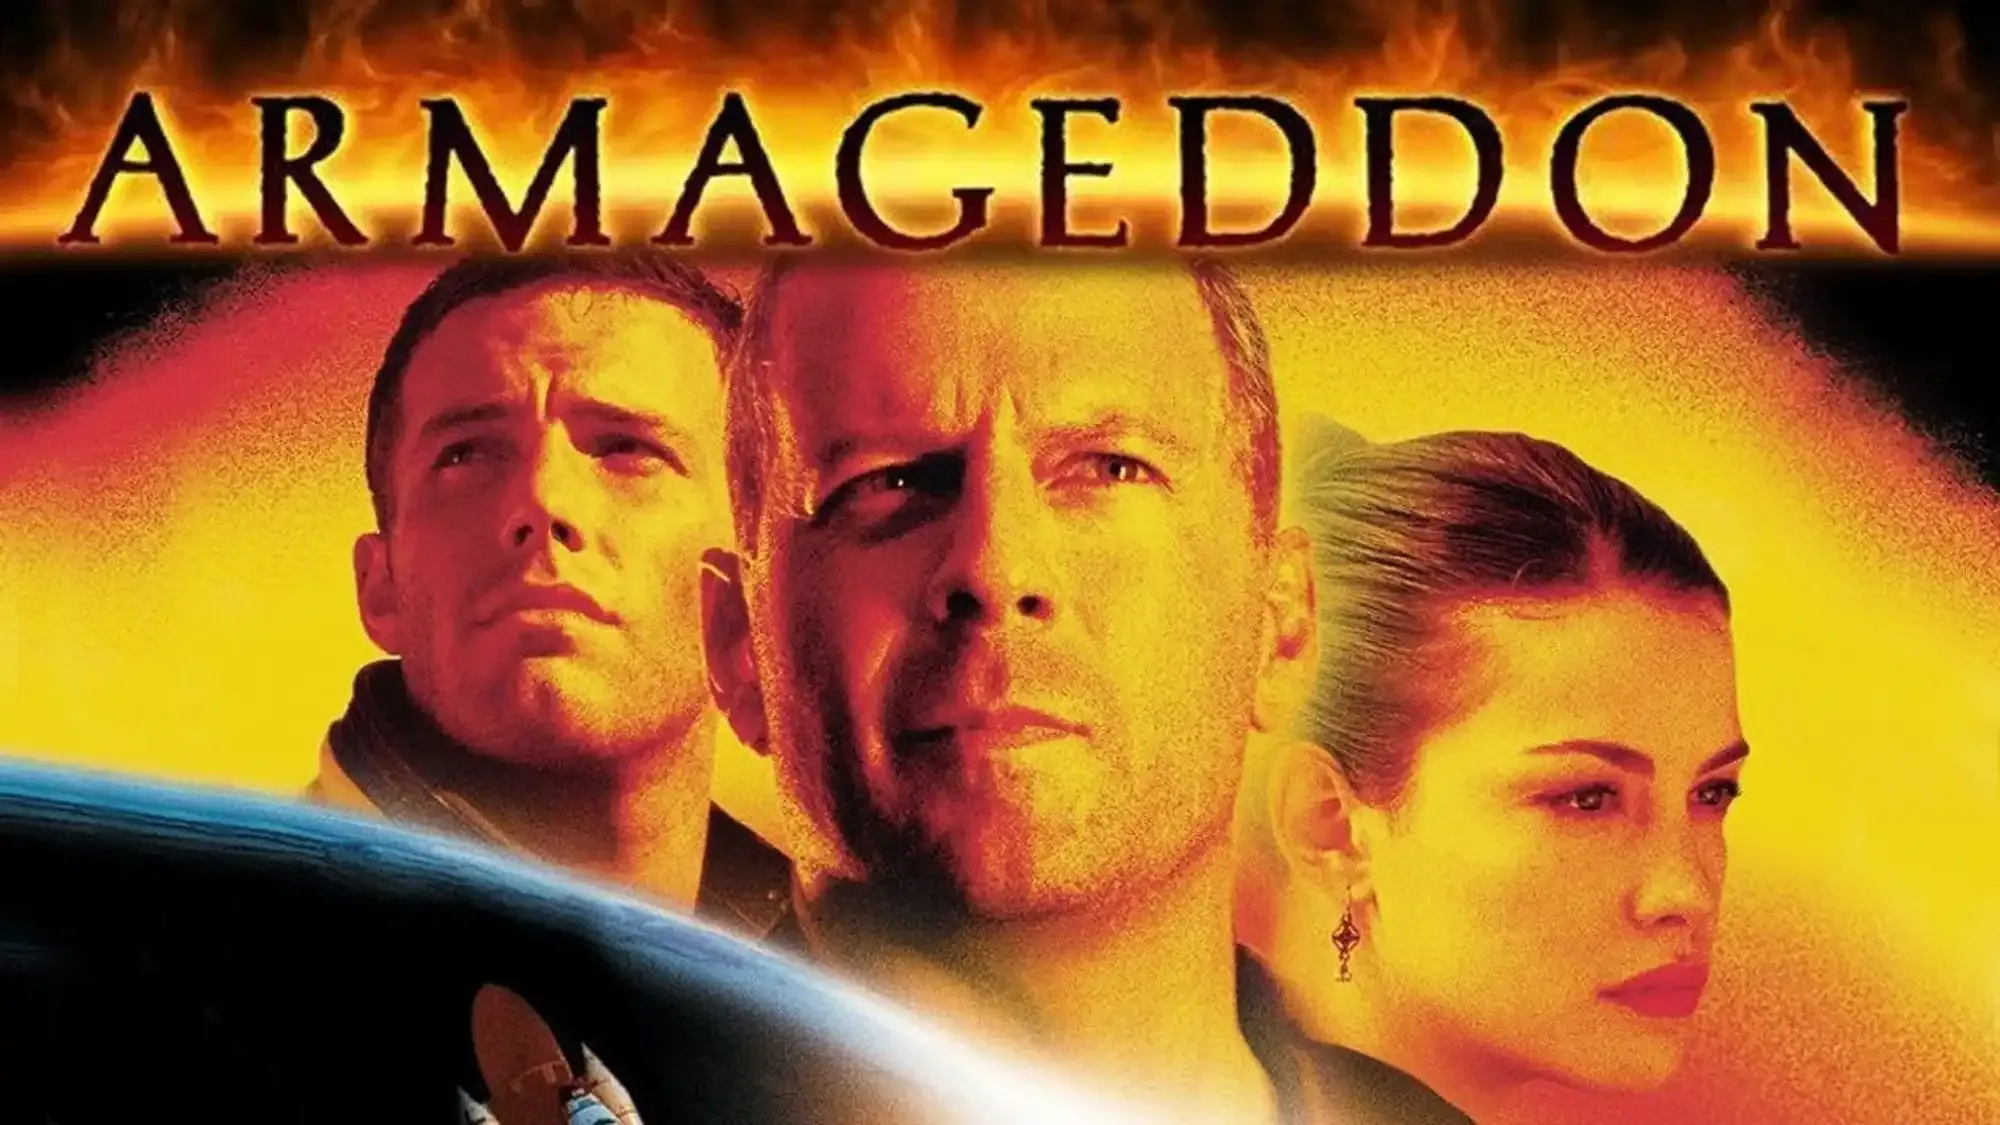 Armageddon movie review